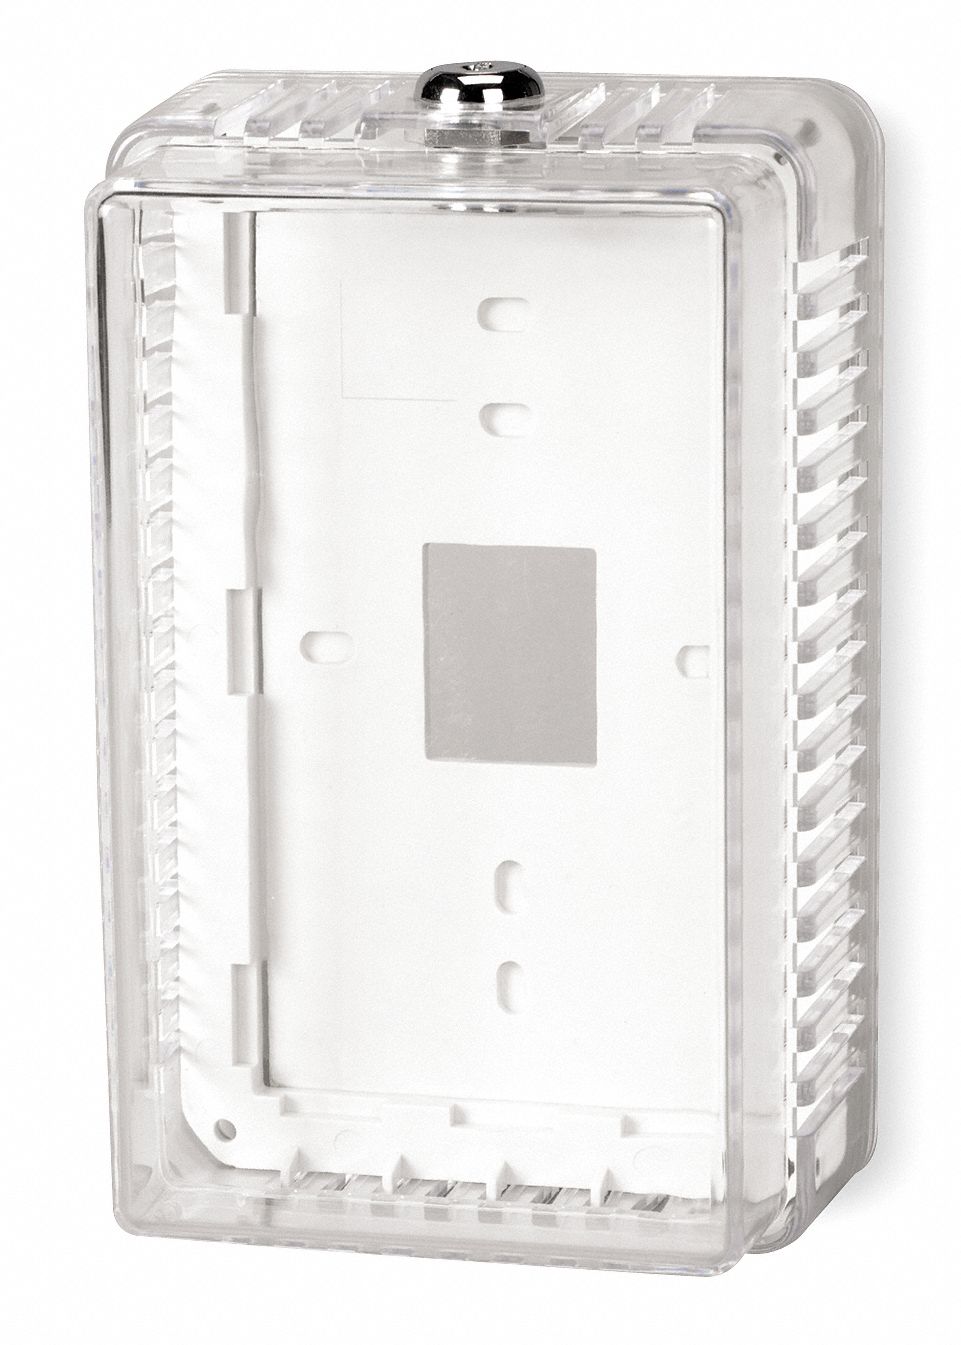 Grainger 2E379A Universal Thermostat Clear Plastic Guard for sale online